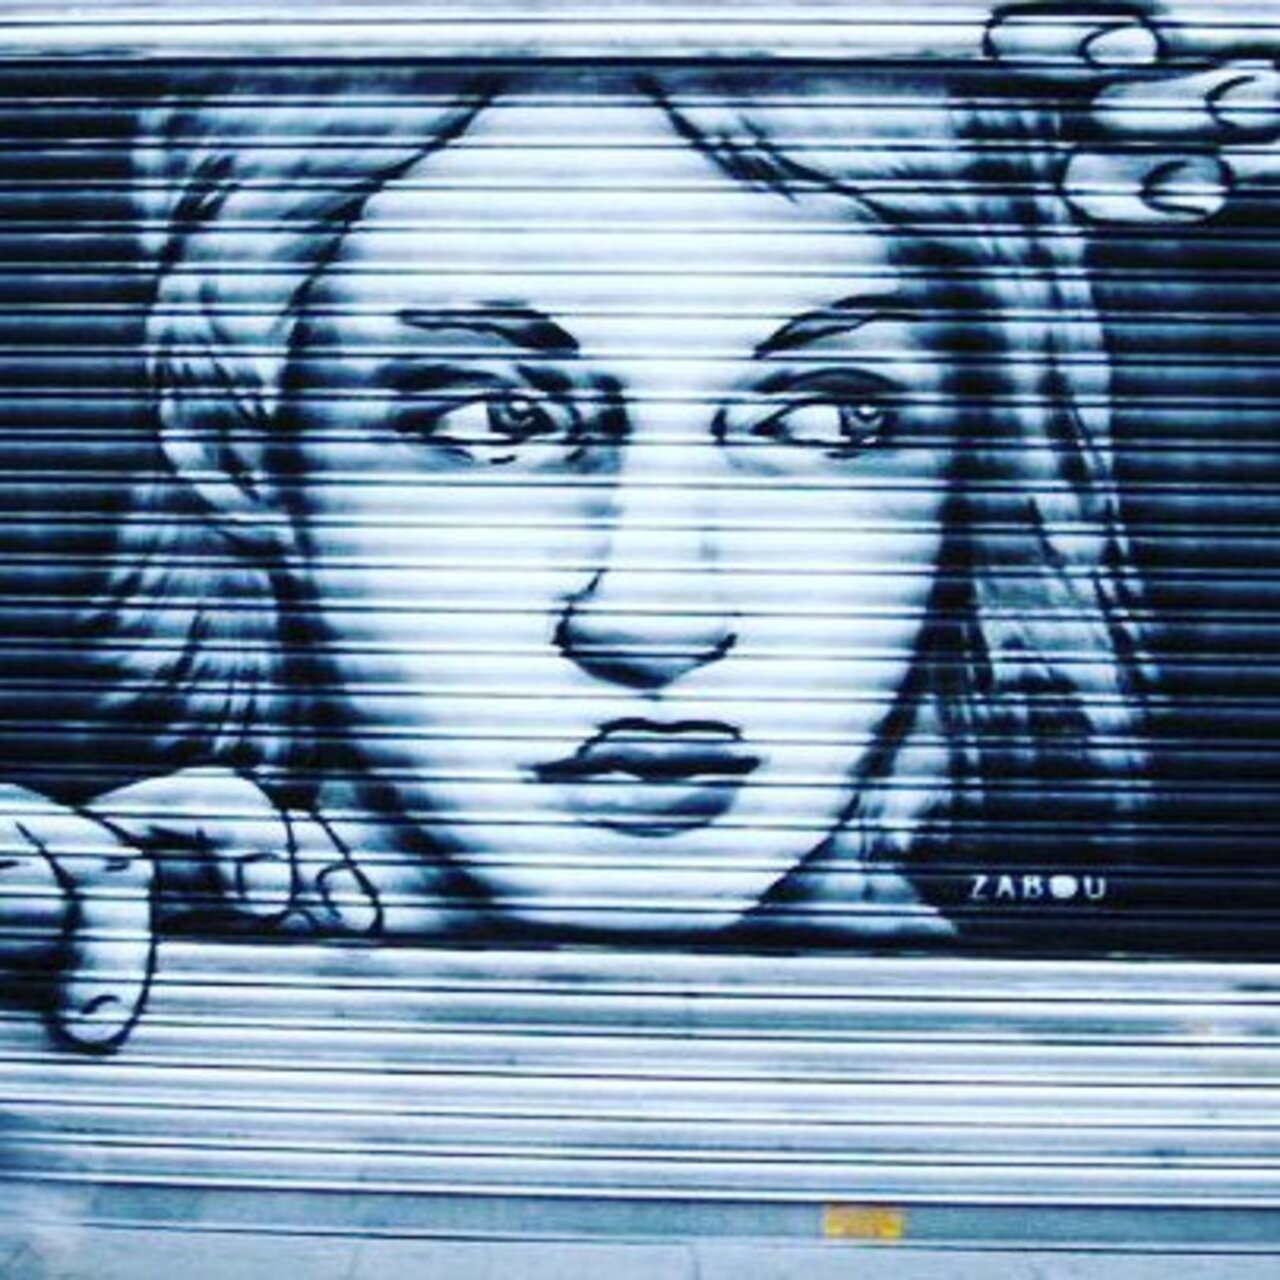 #Paris #graffiti photo by @senyorerre http://ift.tt/1kBish0 #StreetArt https://t.co/E2PqPqXrDj